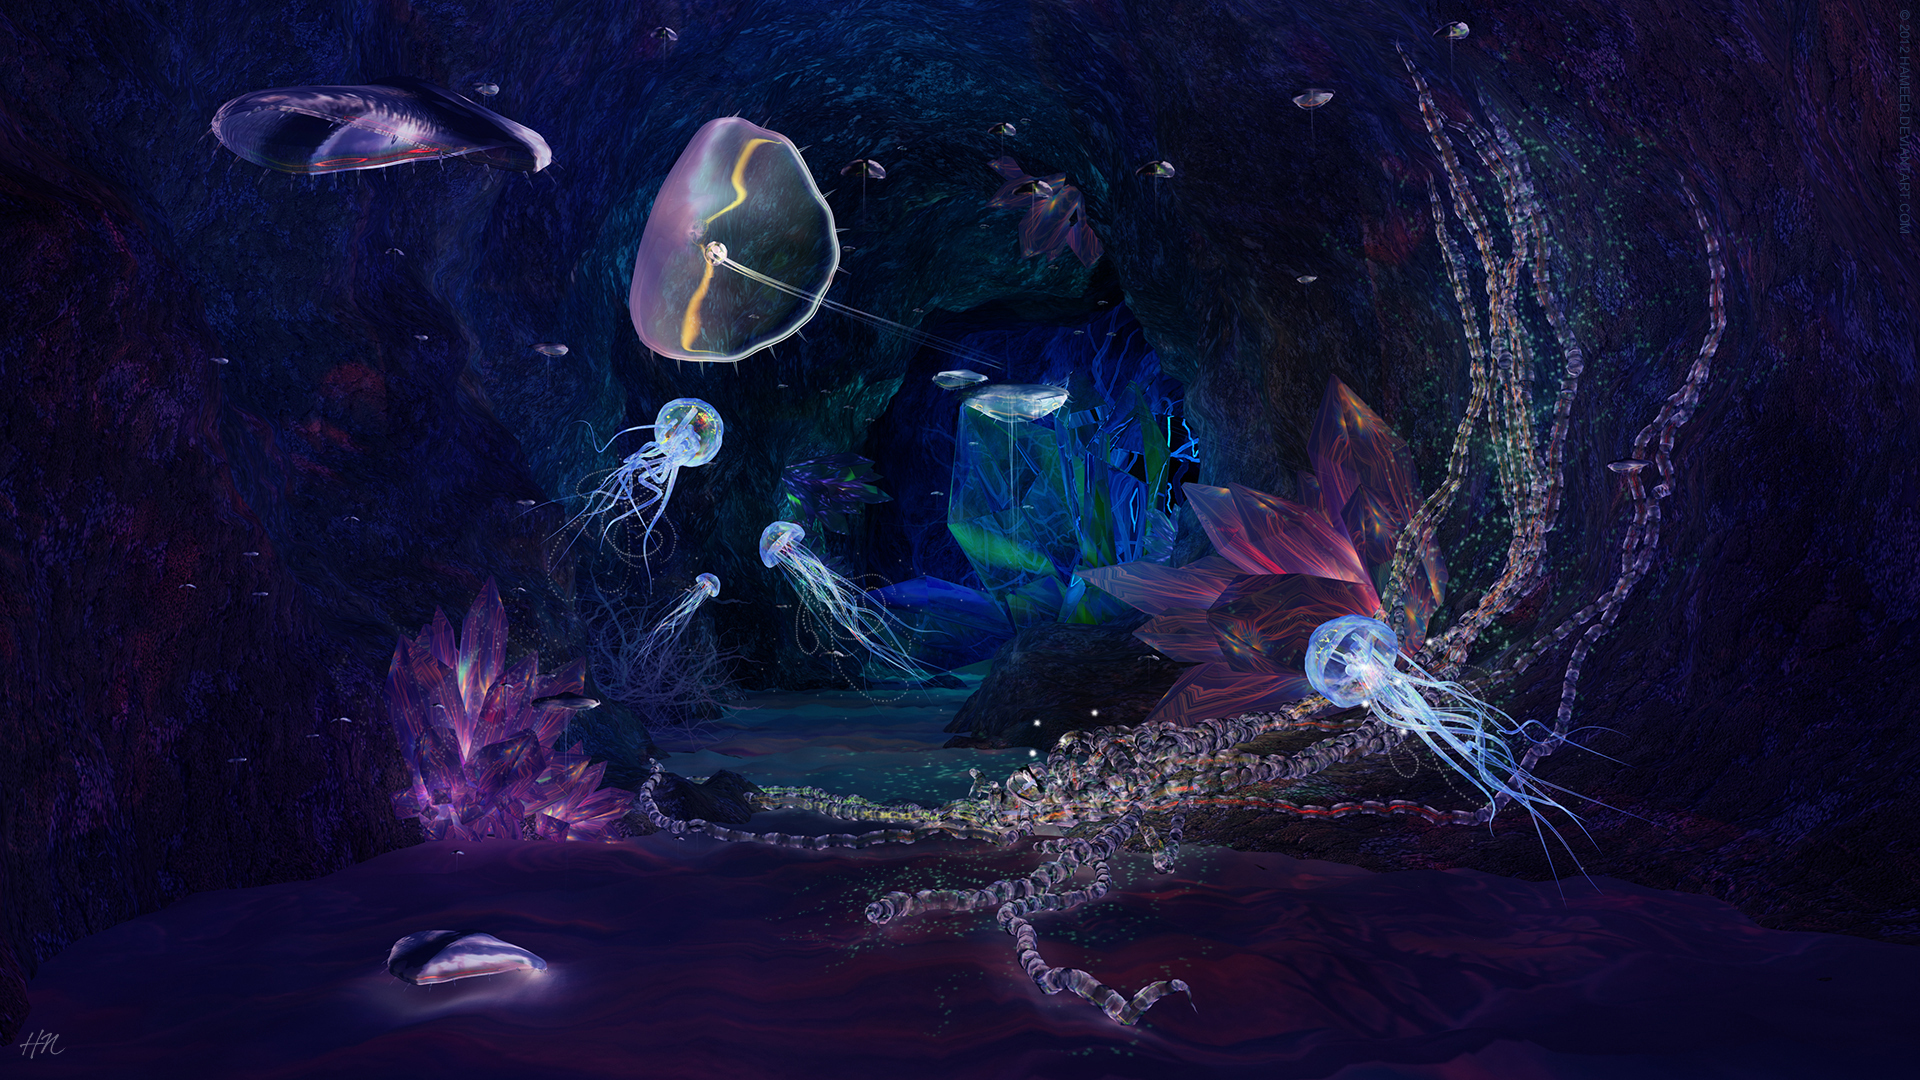 jellyfish, Sealife, Underwater, Fishes, Colors, Art, Artistic, Cg, Digital, 3d, Ocean, Sea, Water, Liquid, Wet, Plants, Magic Wallpaper